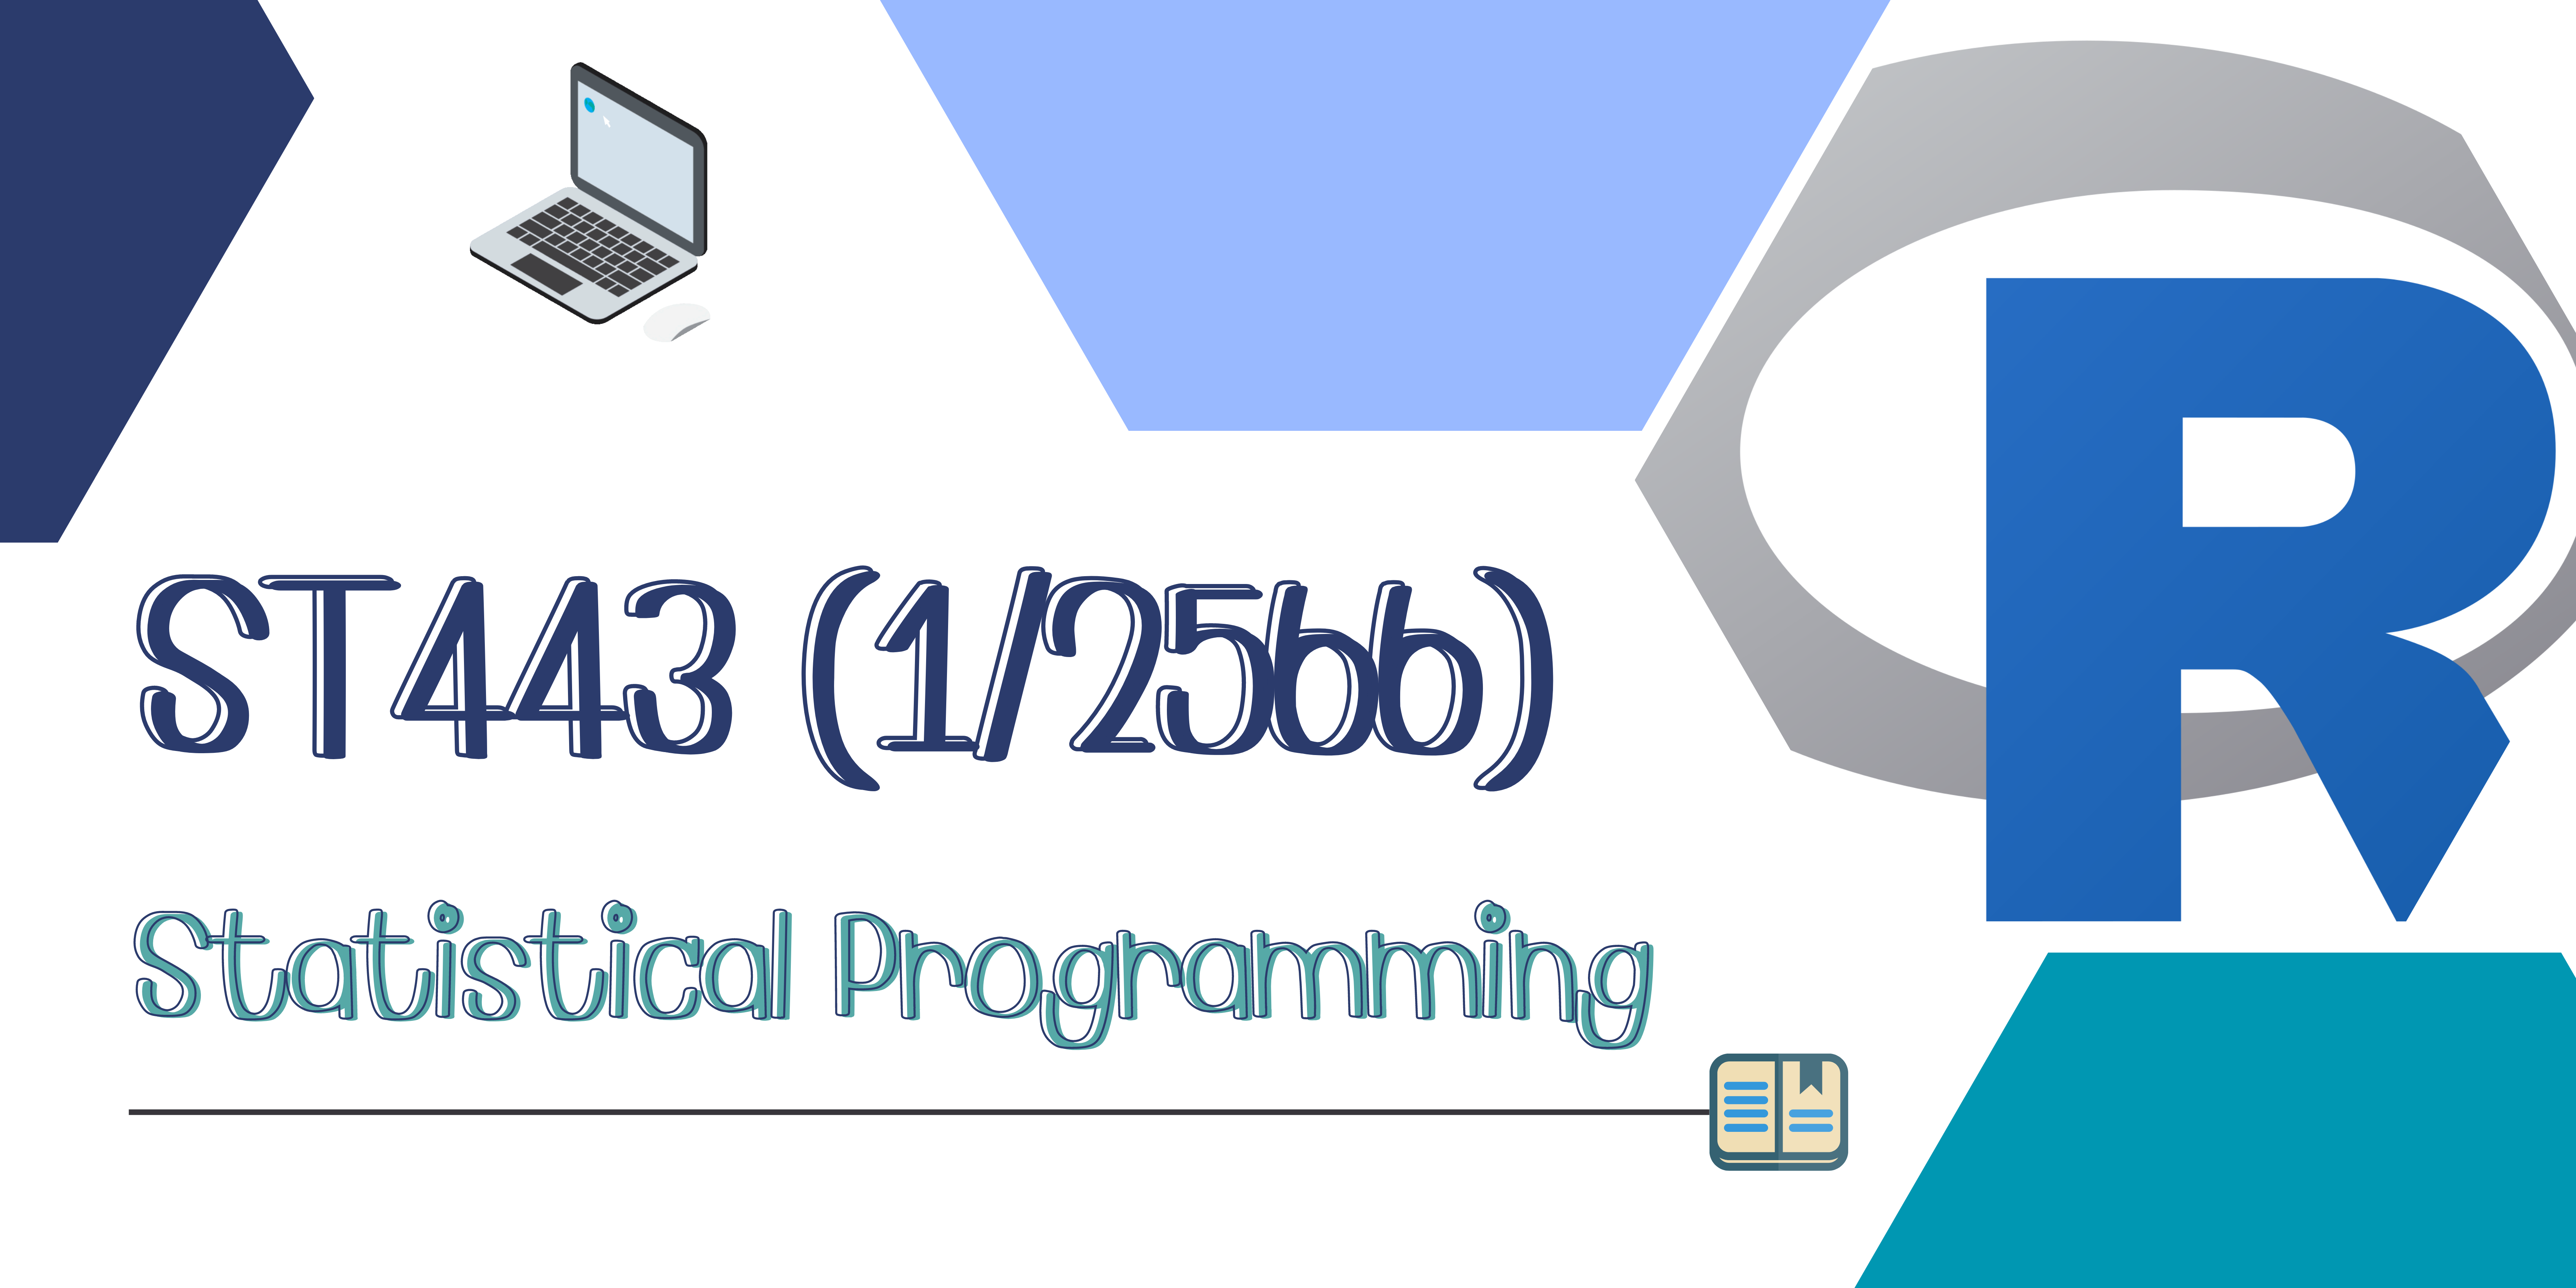 ST443 Statistical Programming (1/2566)